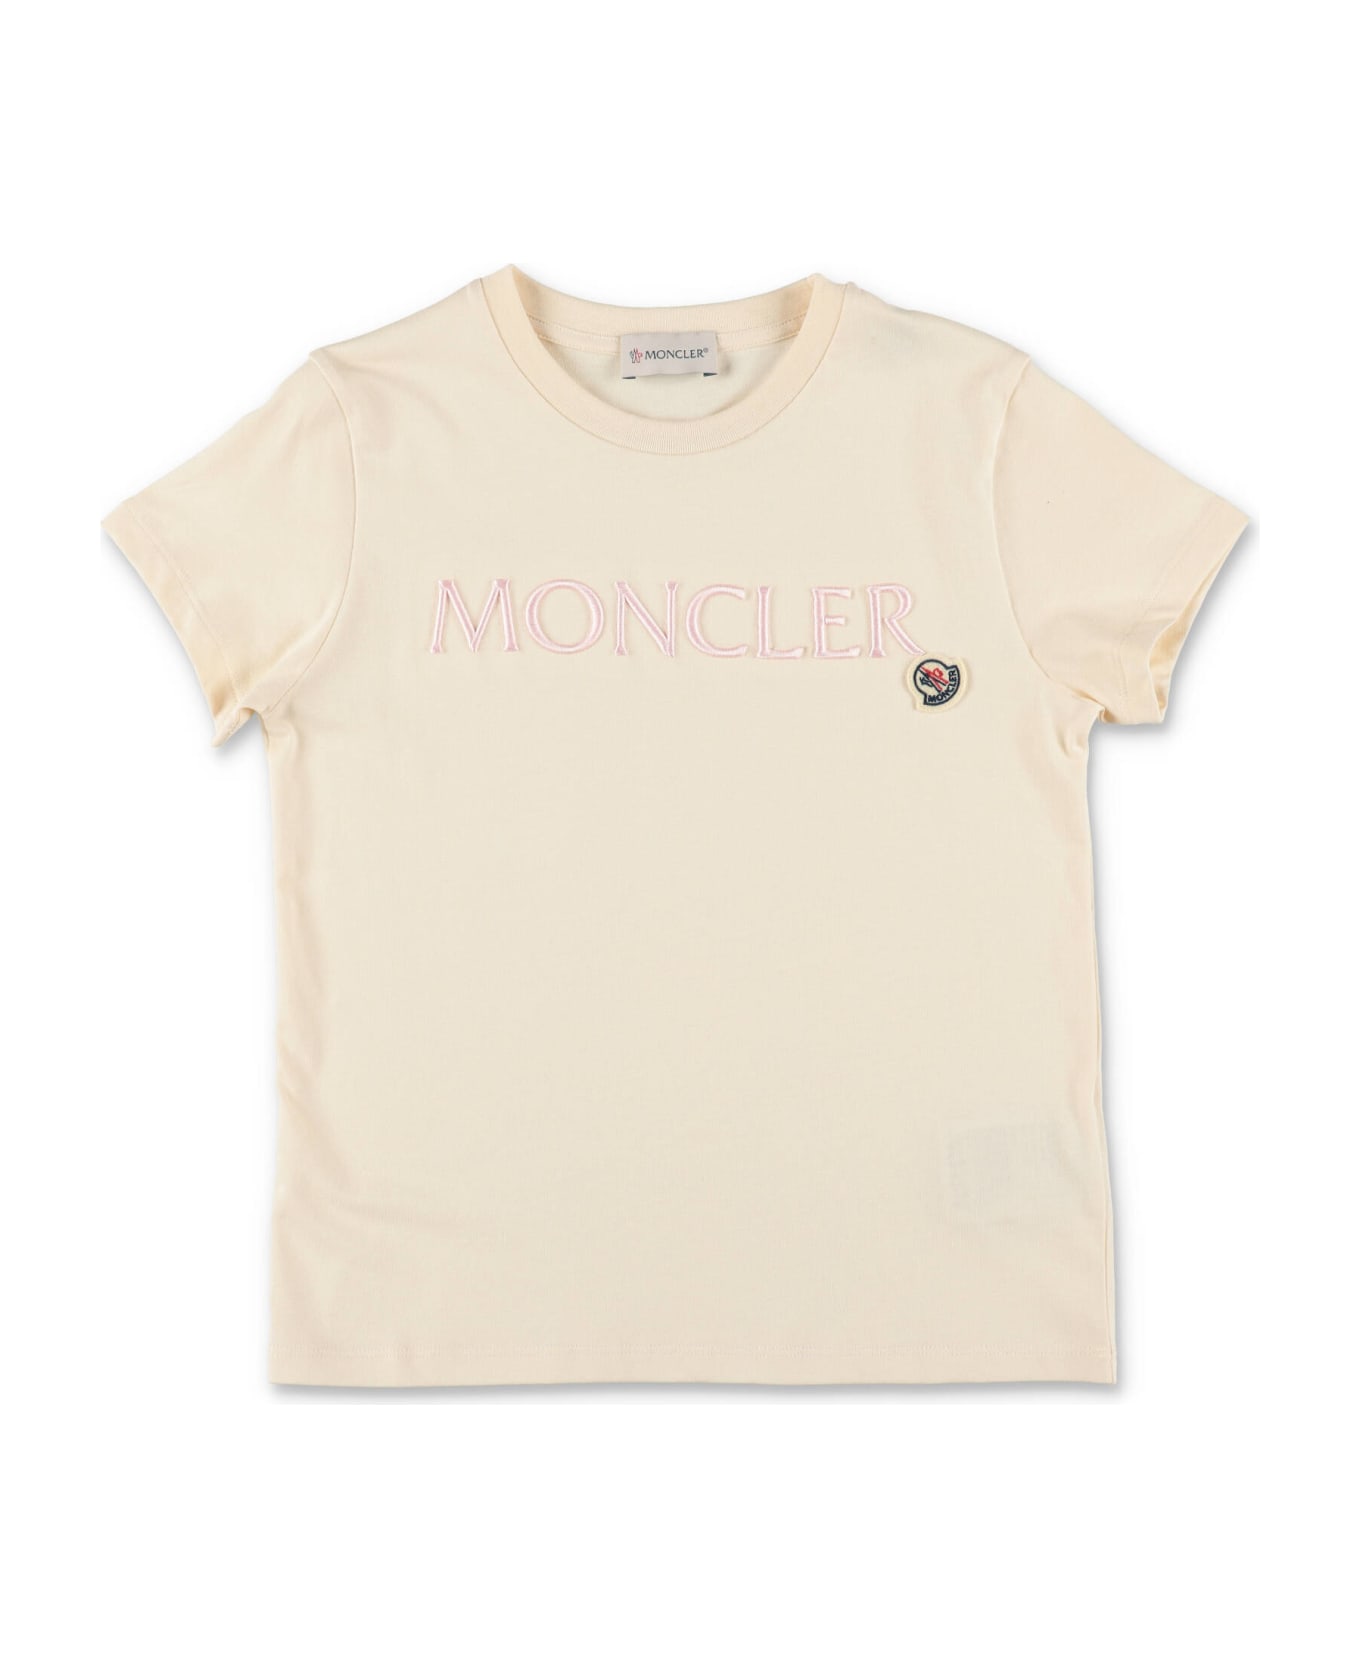 Moncler T-shirt Crema In Jersey Di Cotone Bambina - Crema